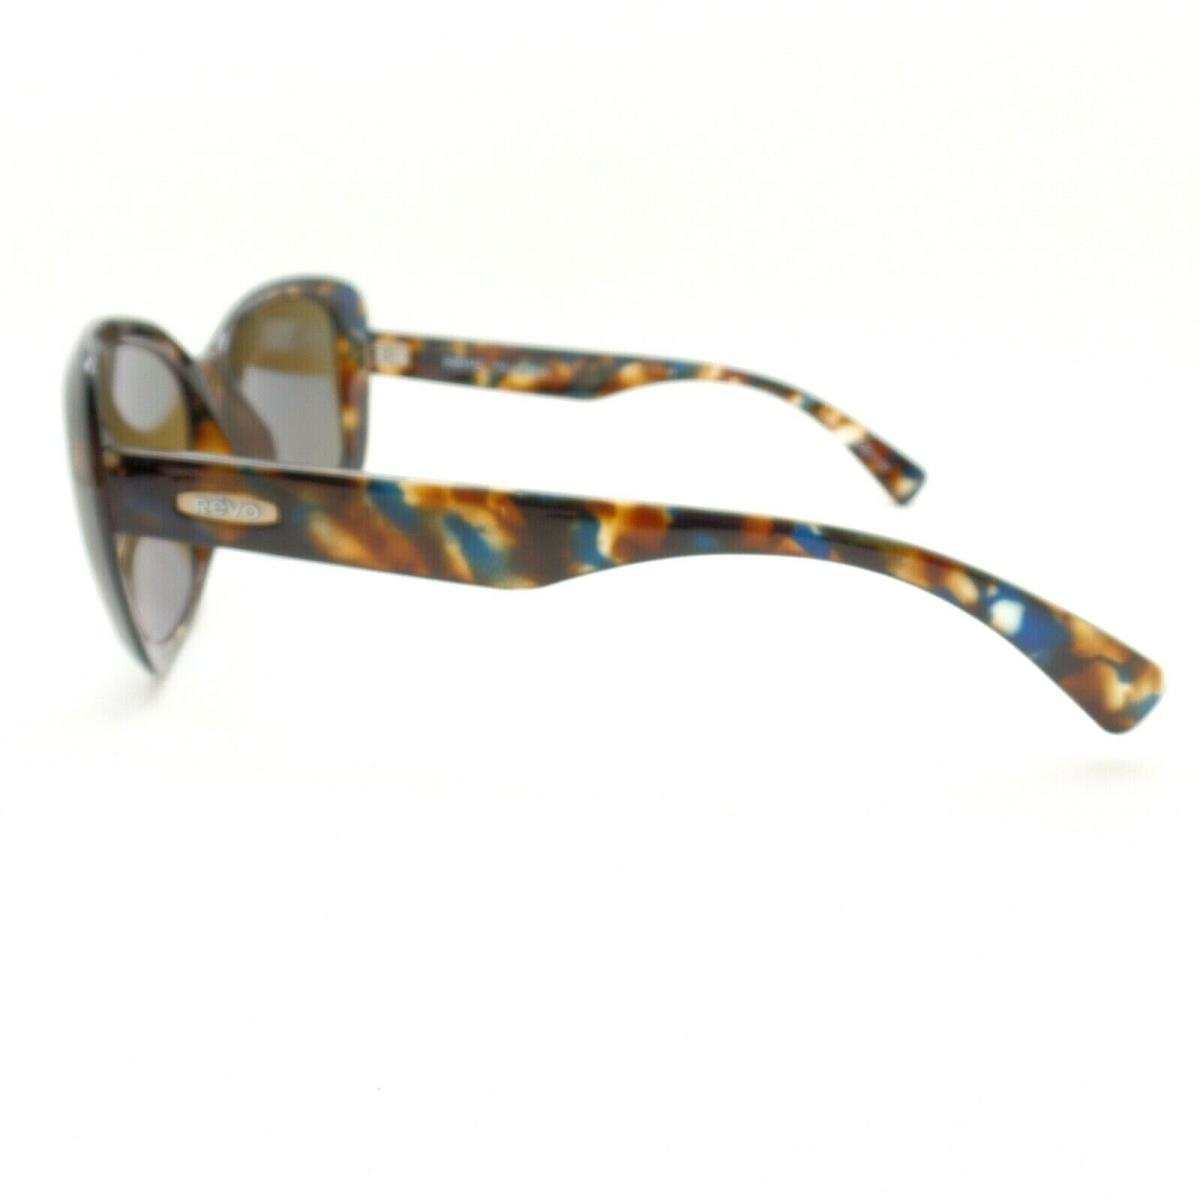 Revo sunglasses  - Indigo Marble Frame, Blue Water Polarized Mirror Lens